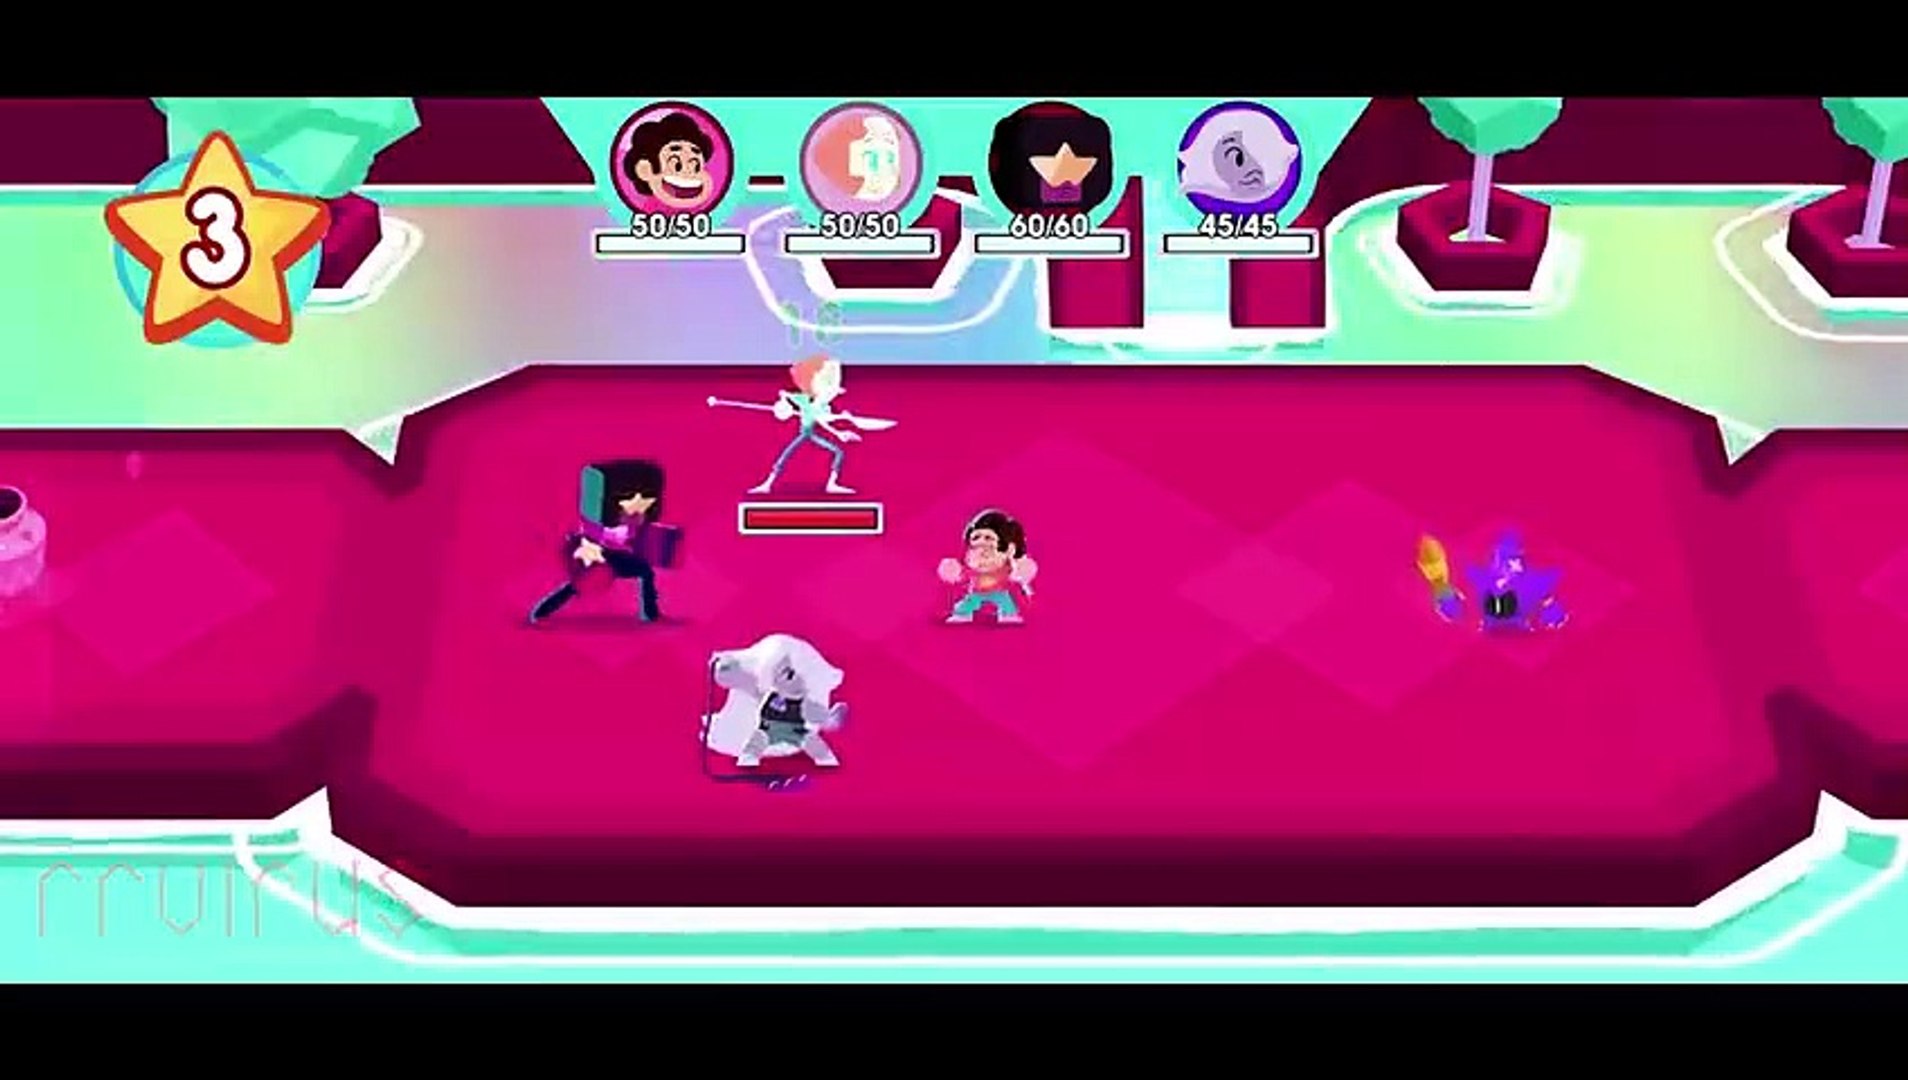 Steven Universe Unleash the Light (by Cartoon Network) - iOS Walkthrough Gameplay Part 1 - Video